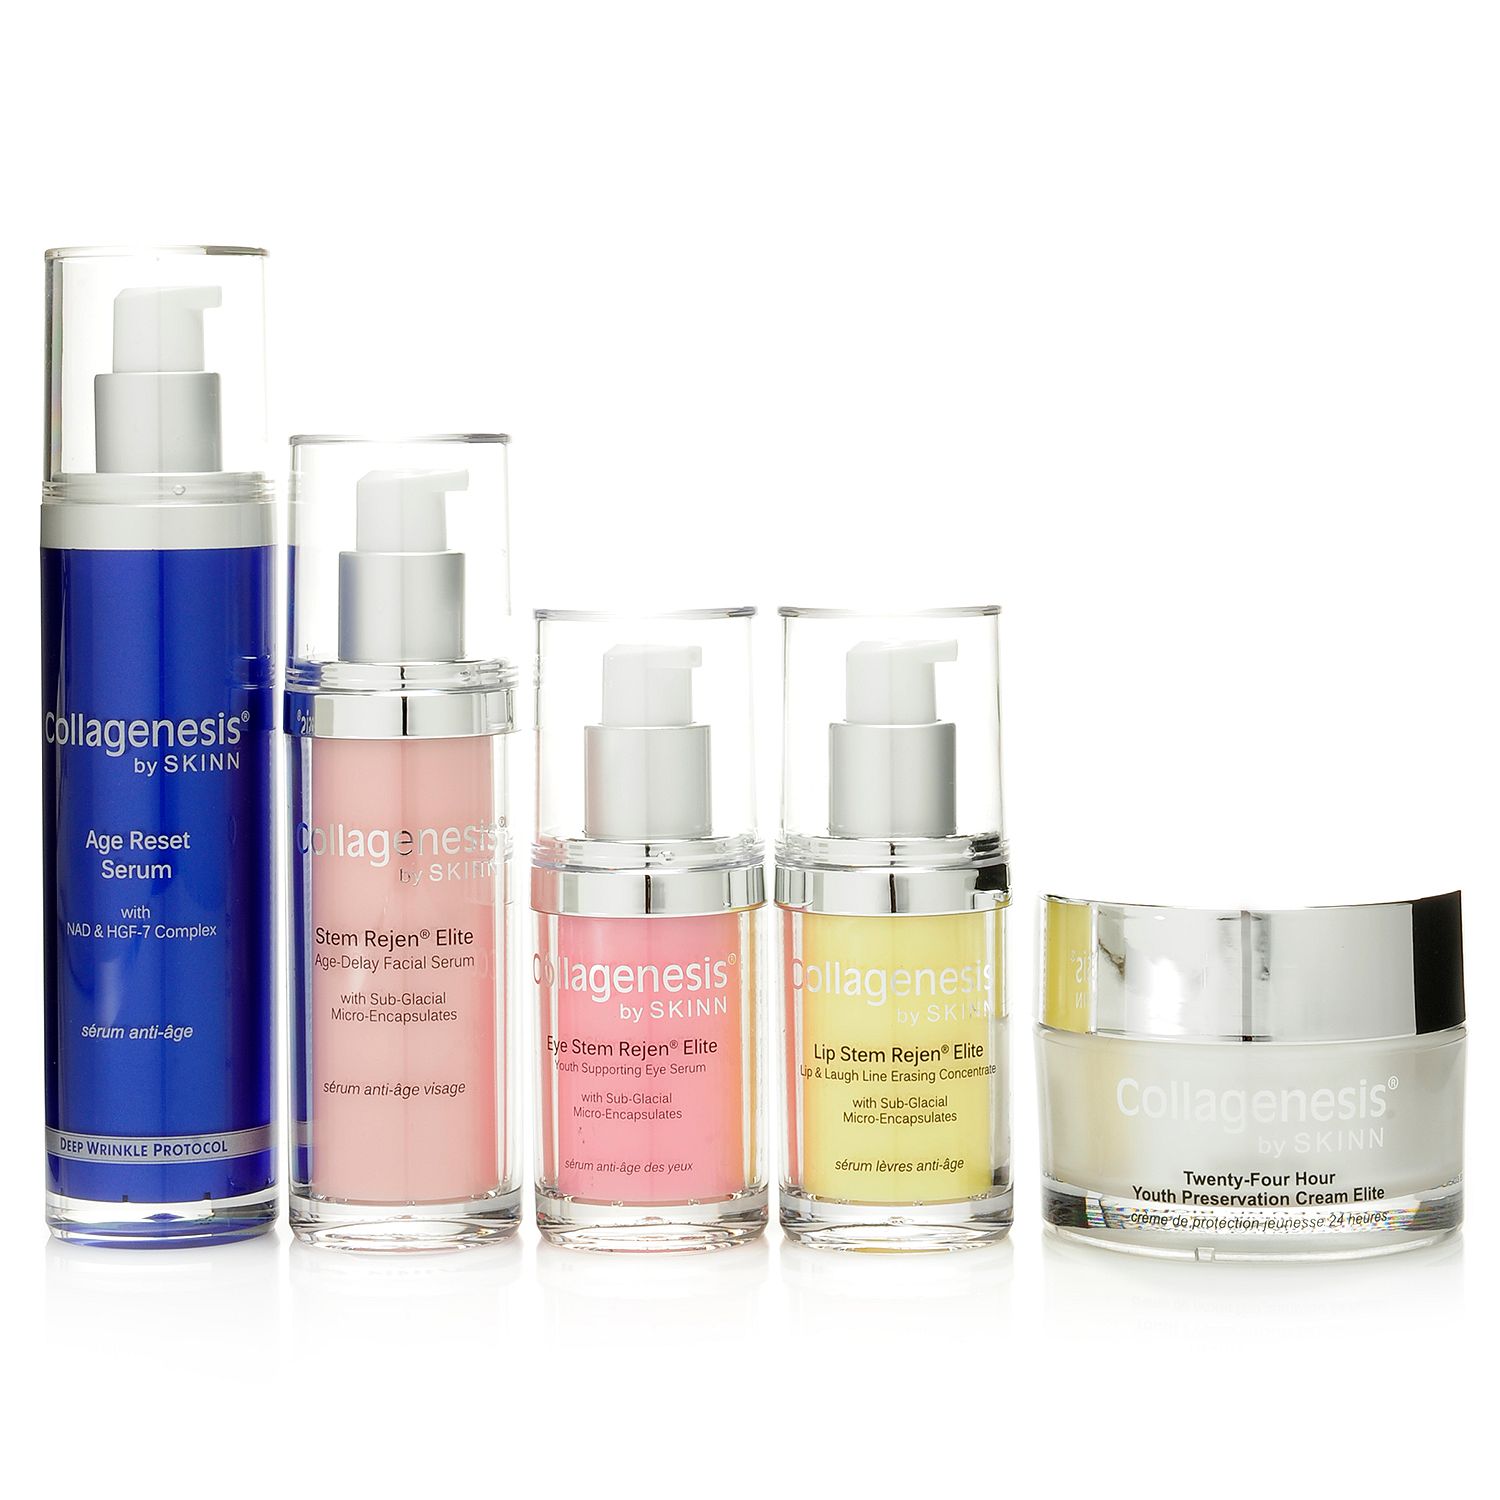 310-603- Skinn Cosmetics Five-Piece Collagenesis Anti-Aging Set w/ Cosmetic Bag